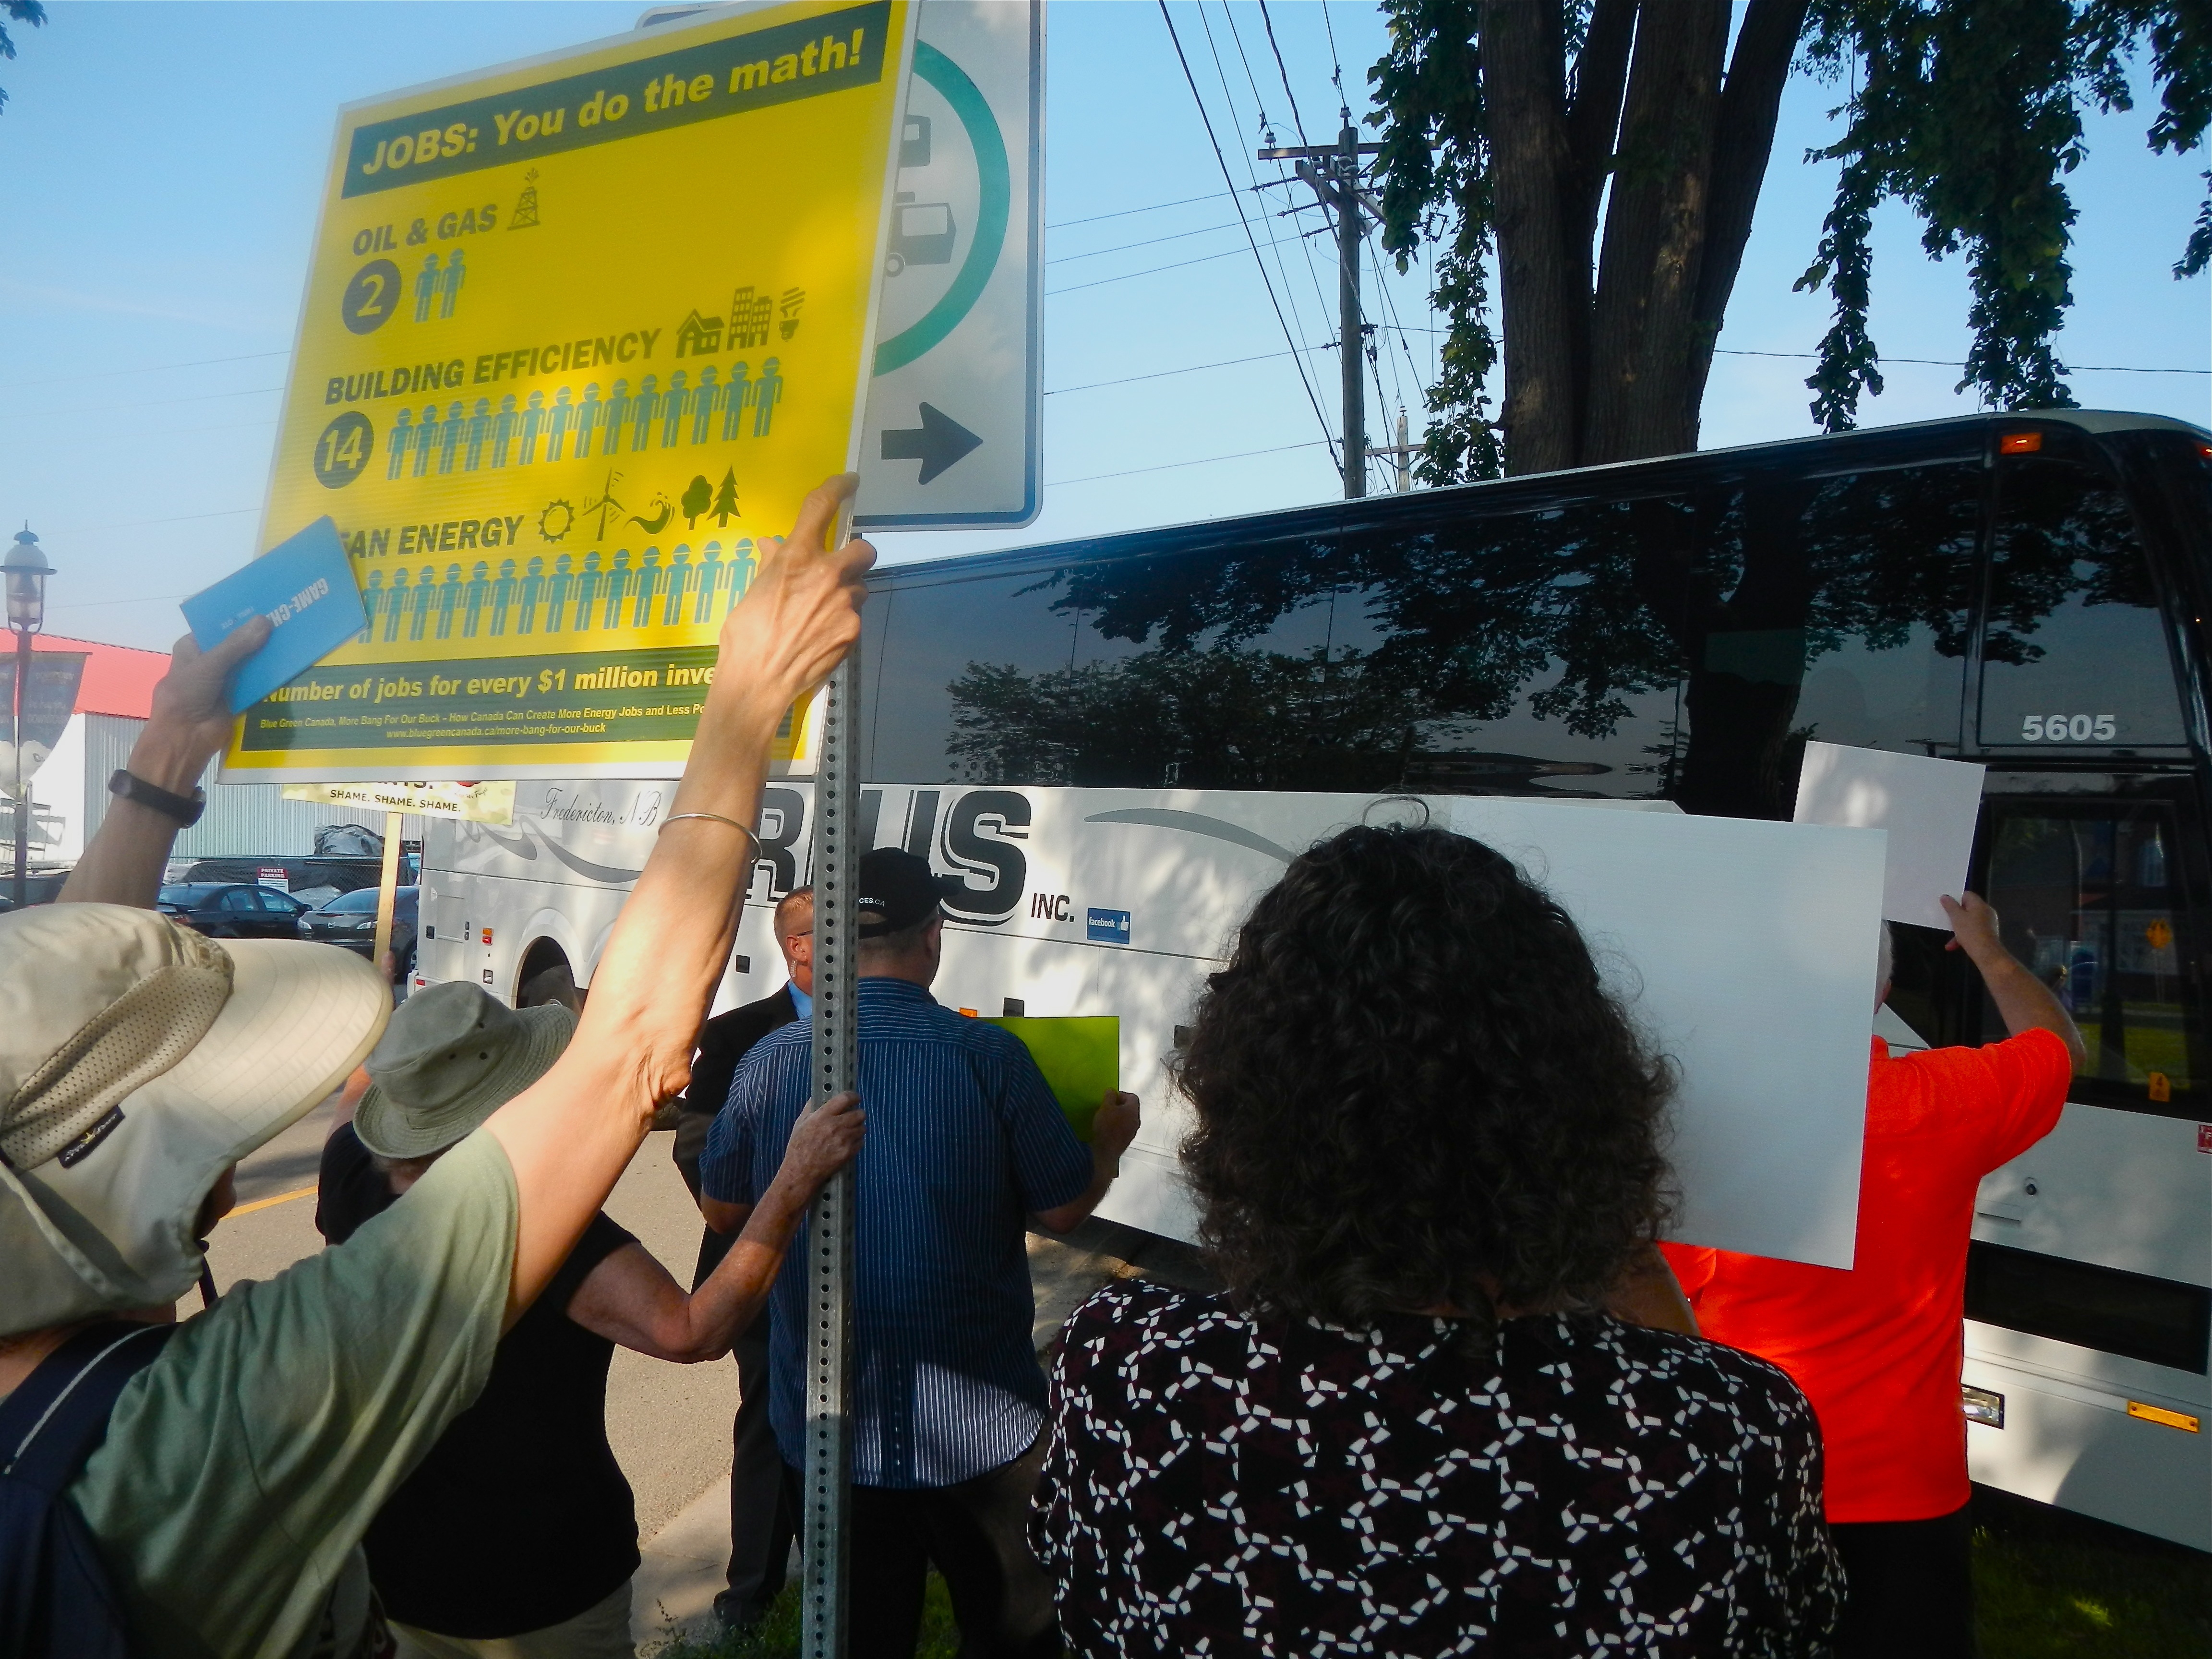 IMAGE - Stephen Harper visit to Fredericton Legion - Harper's bus